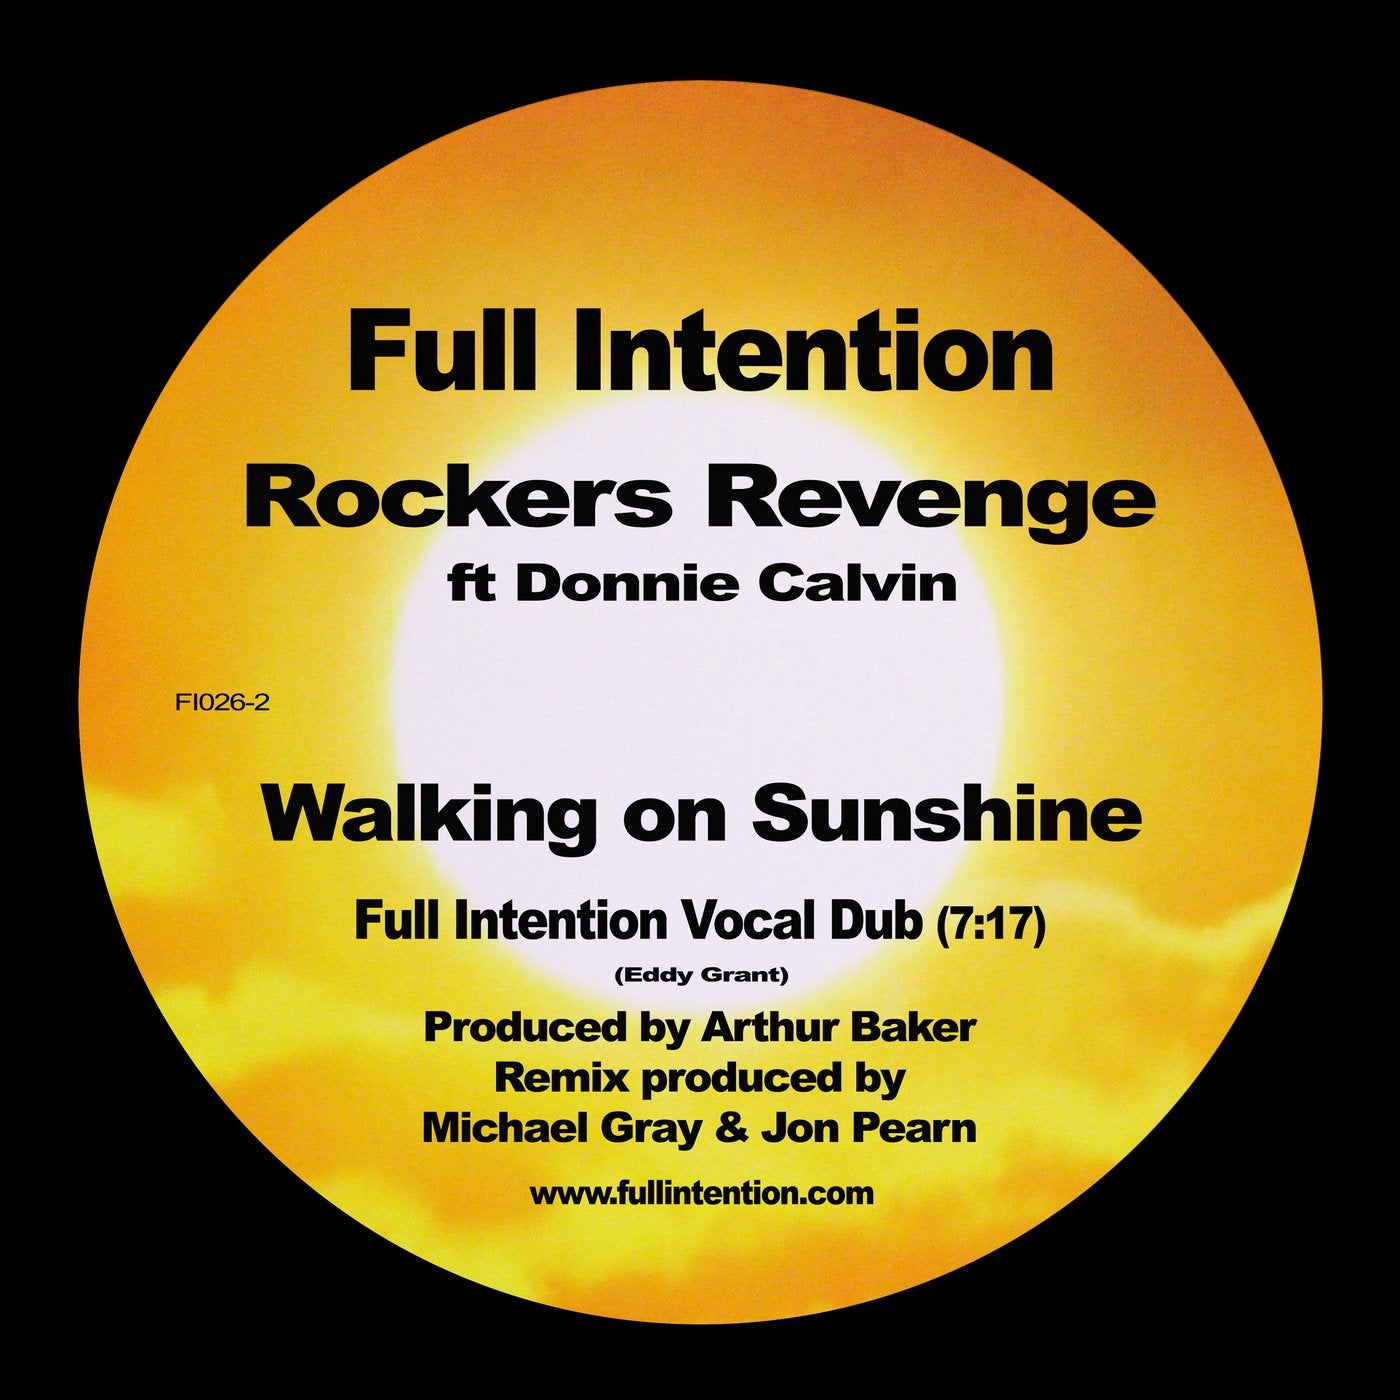 Walking On Sunshine - Full Intention Vocal Dub